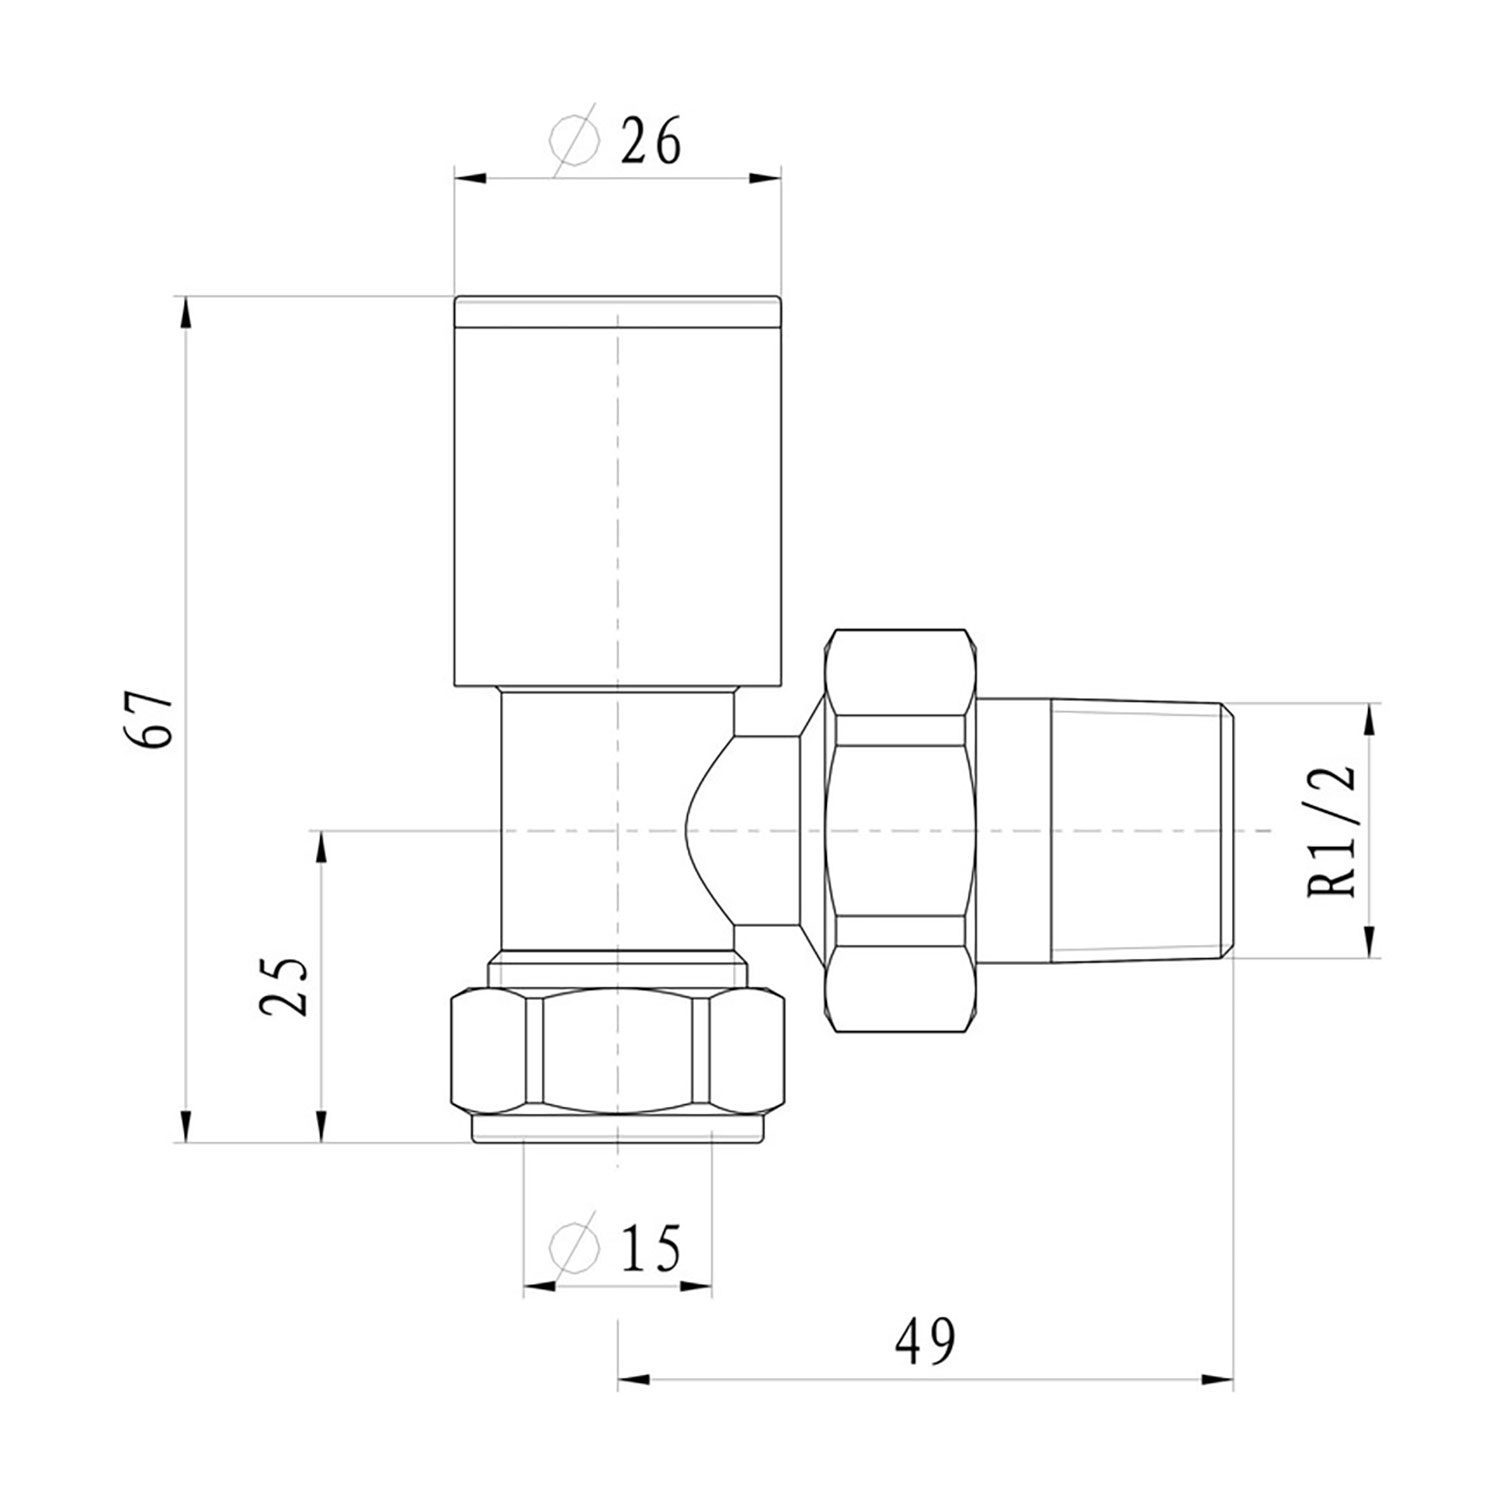 Pattern right angled radiator valves - dimensions